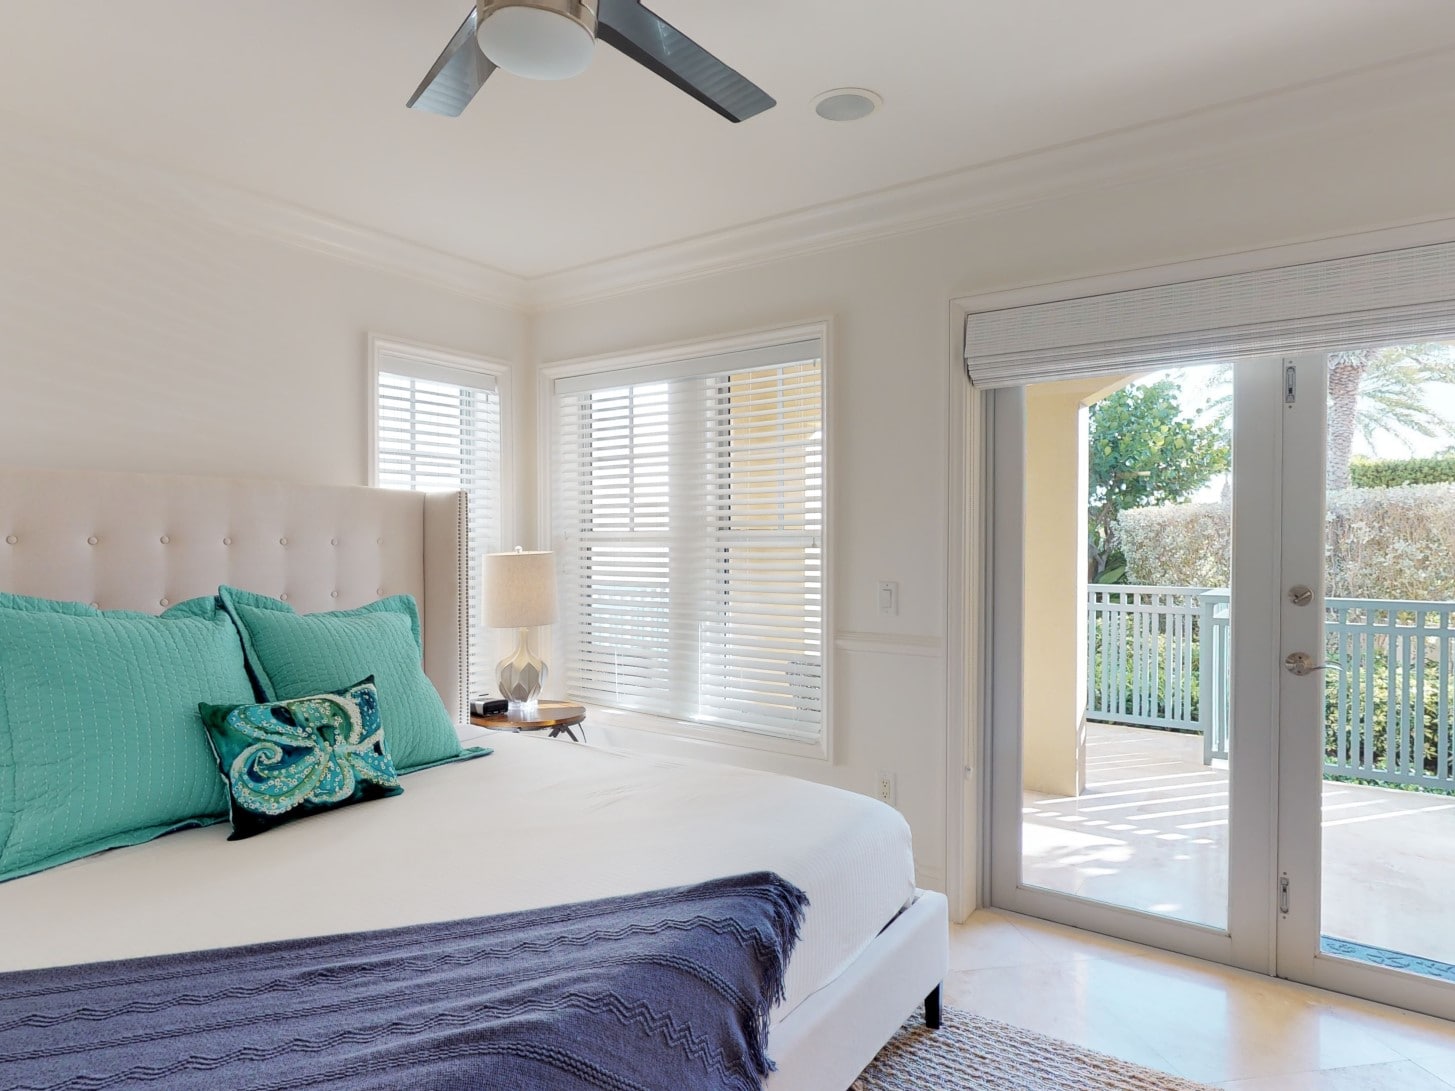 Property Image 2 - Professionally Decorated Standalone 3 Story Home - Marlin Bay Resort & Marina